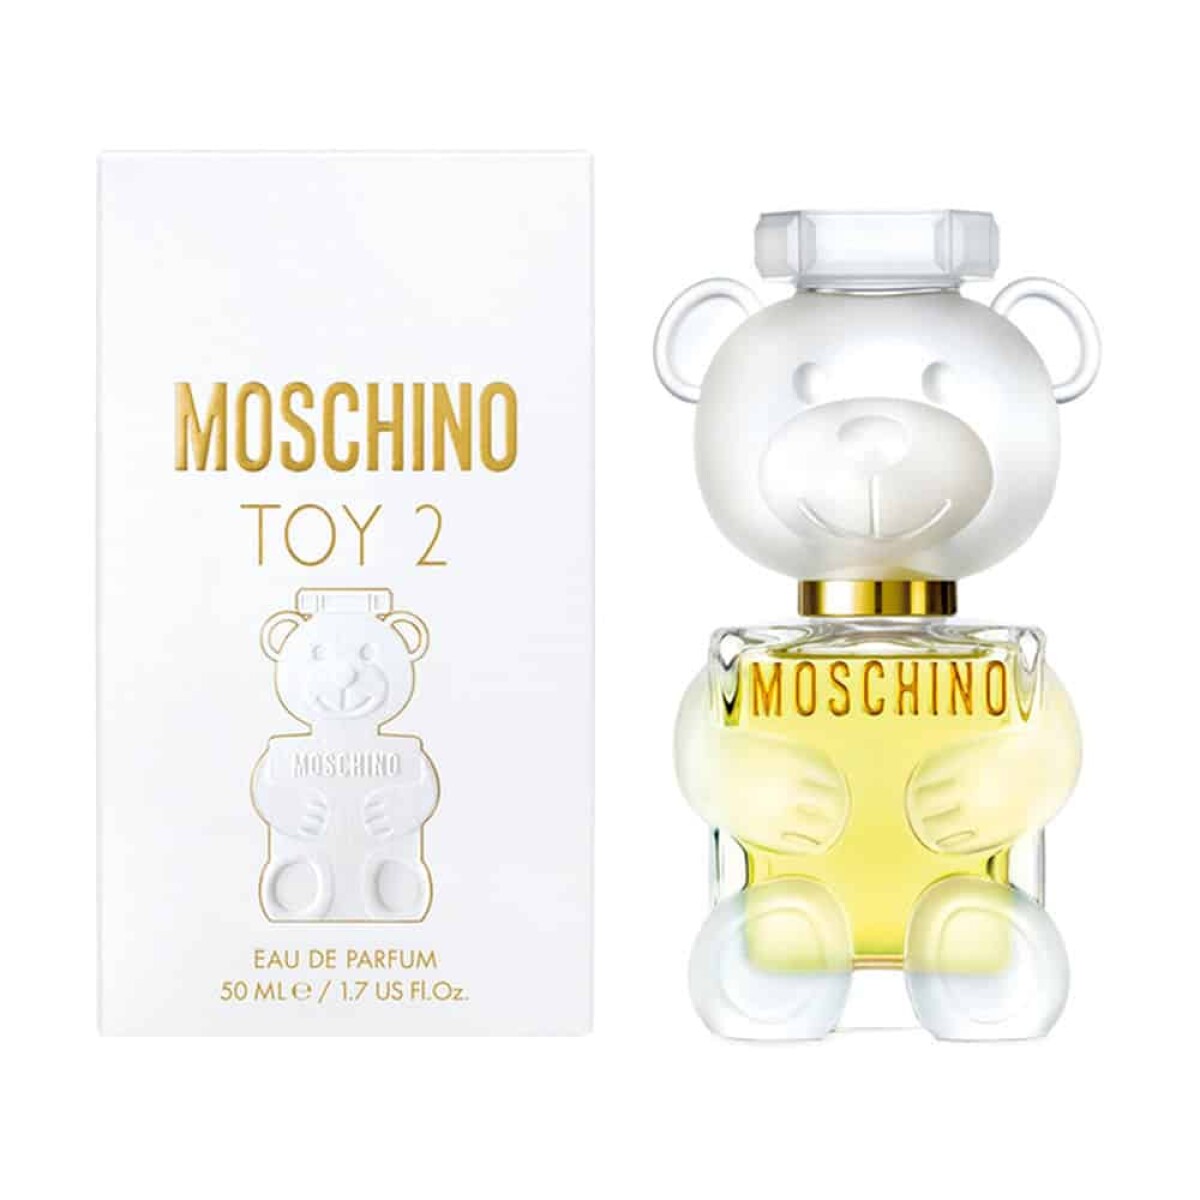 Perfume Moschino Toy 2 Edp 50 ml 